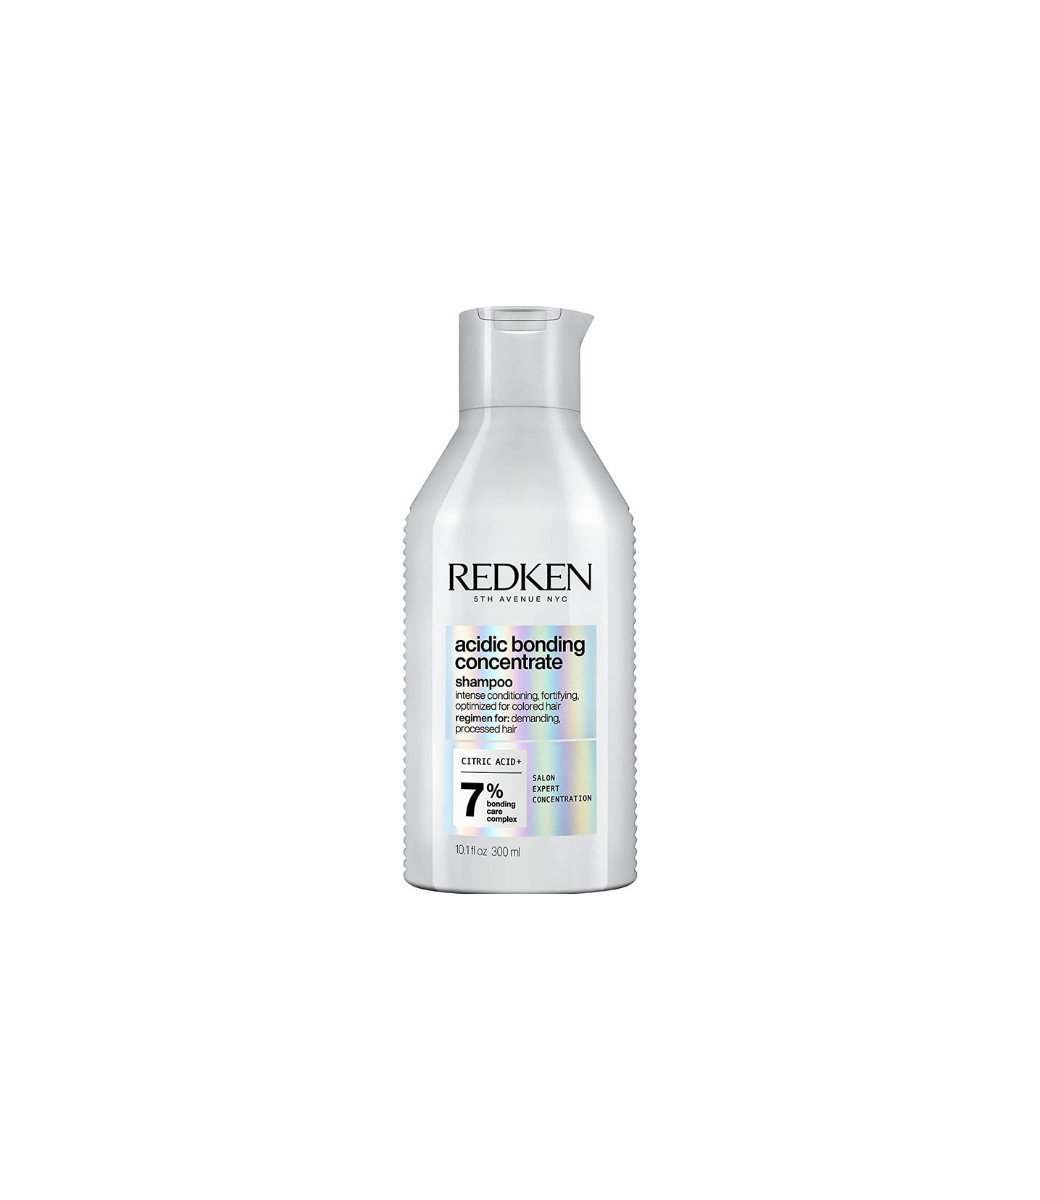 REDKEN 5TH AVENUE NYC REDKEN - Acidic Bonding Concentrate Shampoo - 10.1oz / 300ml